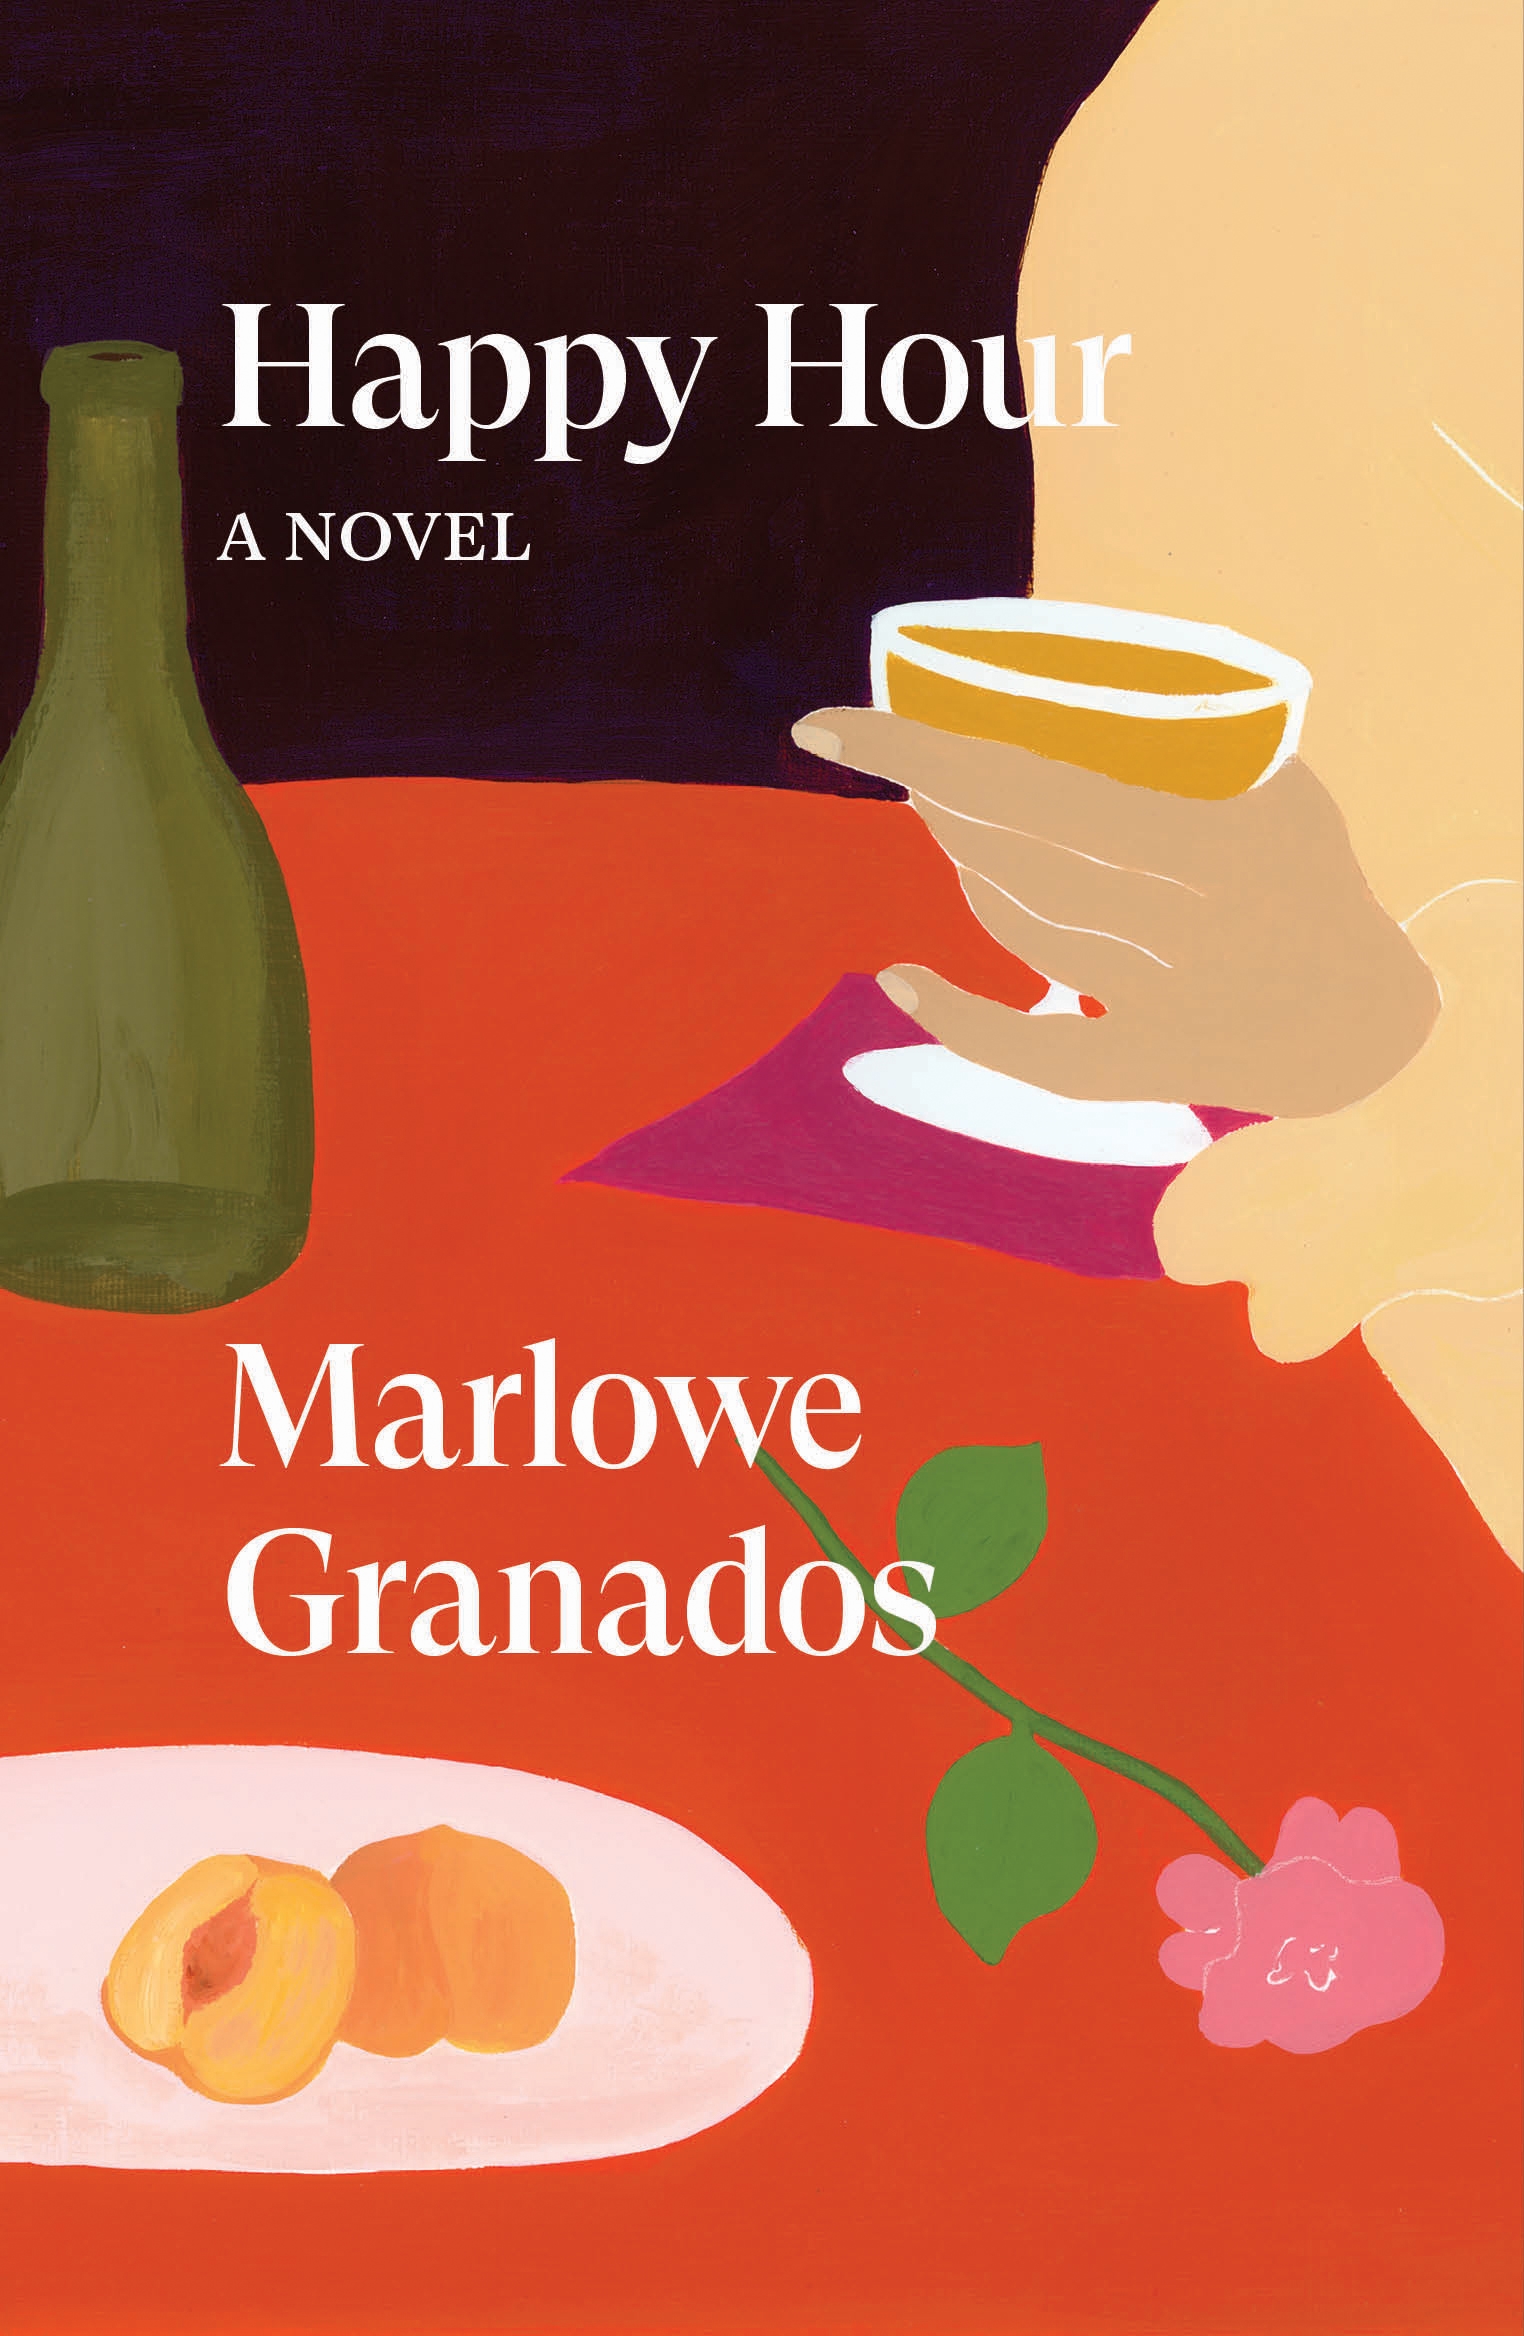 Book Launch: Happy Hour by Marlowe Granados in conversation with Rachel Tashjian